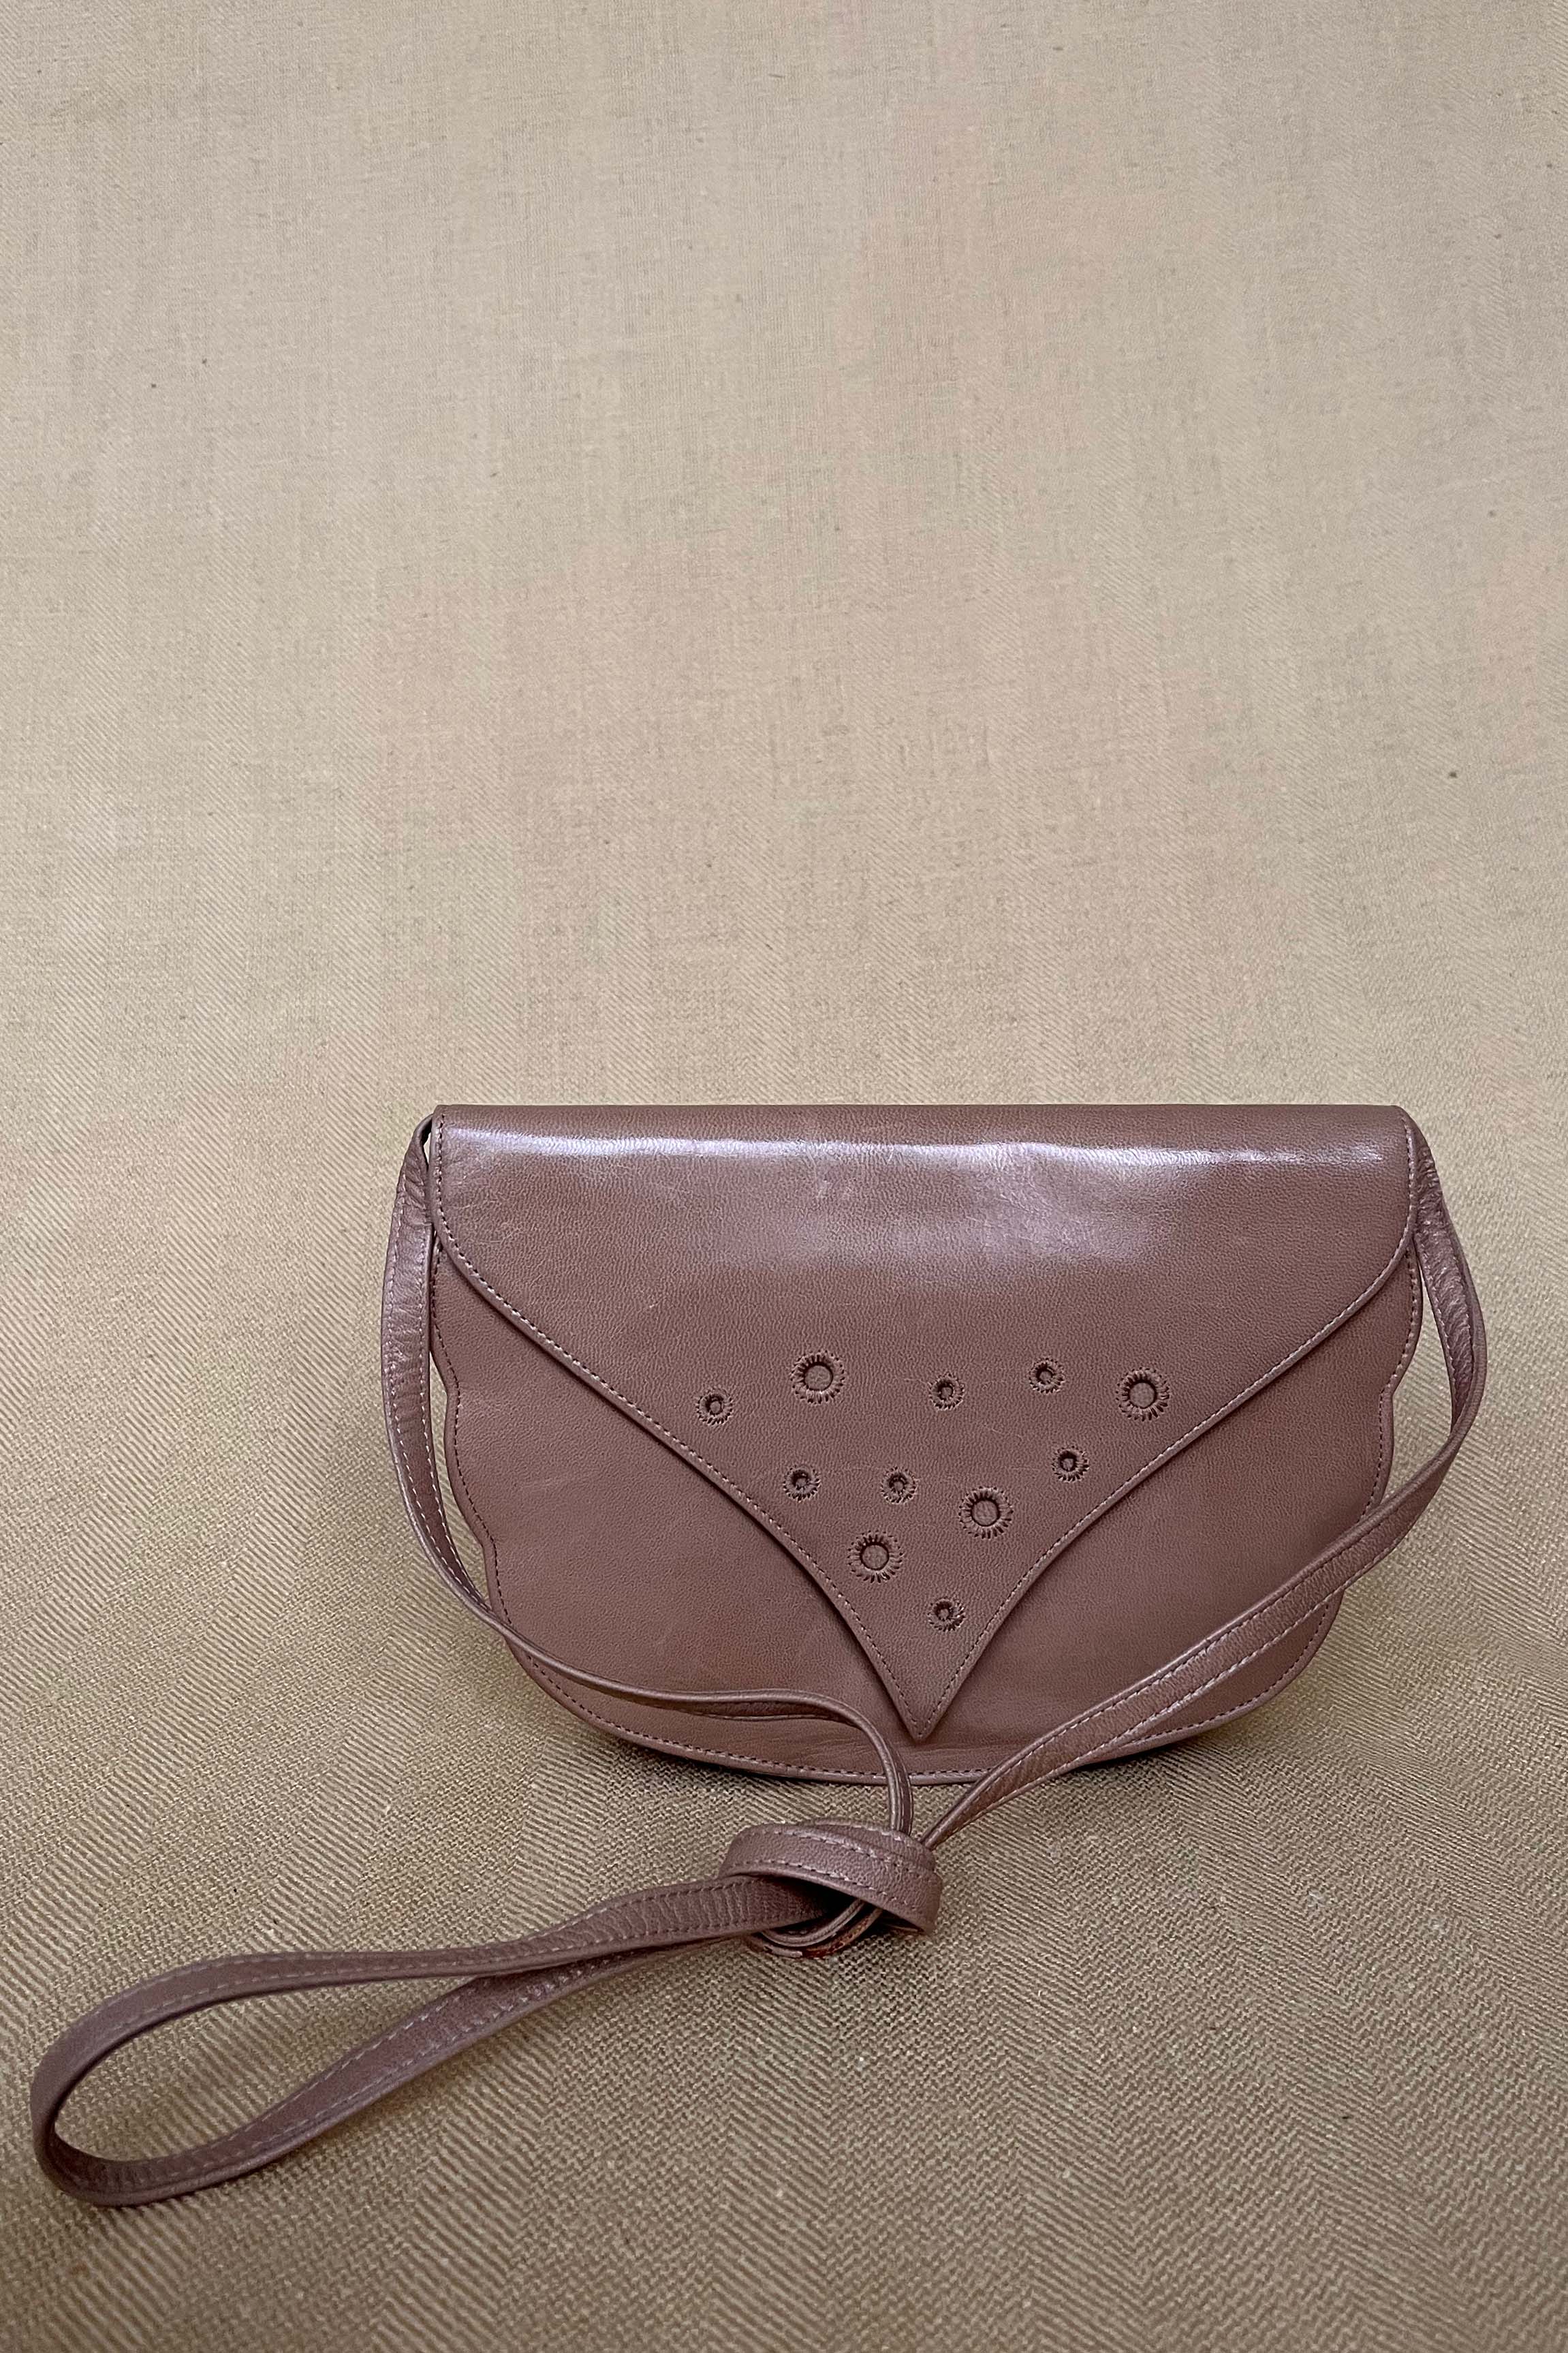 CHARLES & KEITH - Shop now: Metallic push-lock shoulder bag -  https://bit.ly/3xbZhQO | Facebook